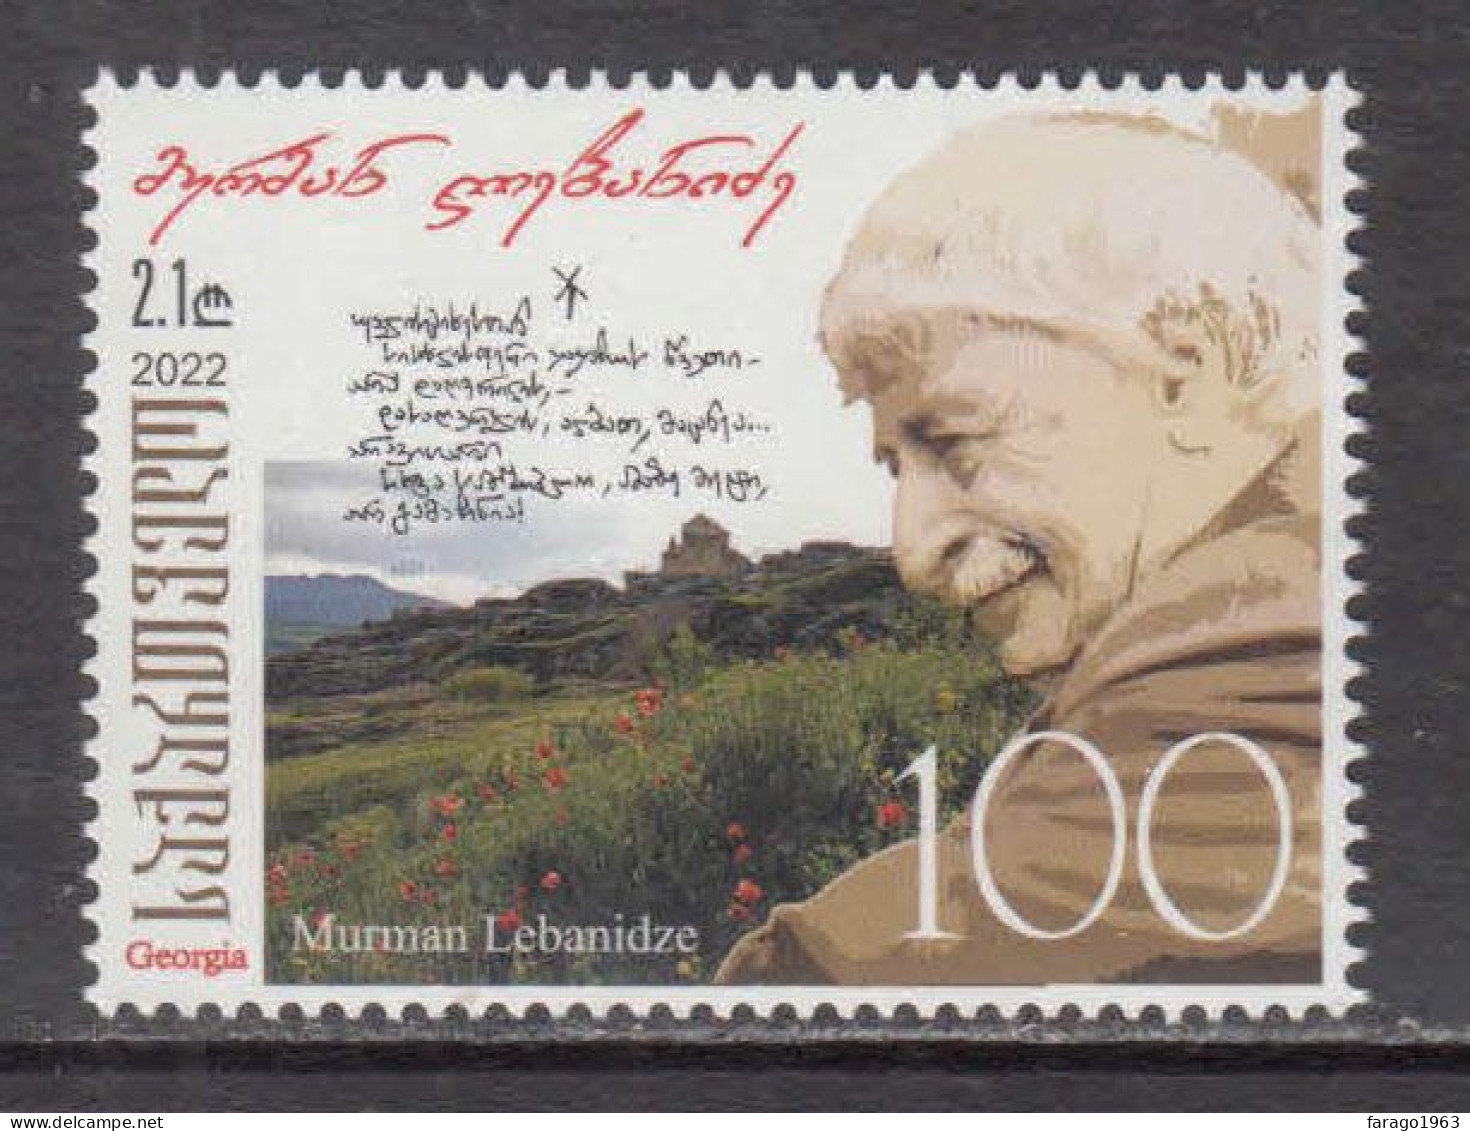 2022 Georgia 100th Anniversary Of The Birth Of Murman Lebanidze, 1922-2002 Complete Set Of 1 MNH - Géorgie